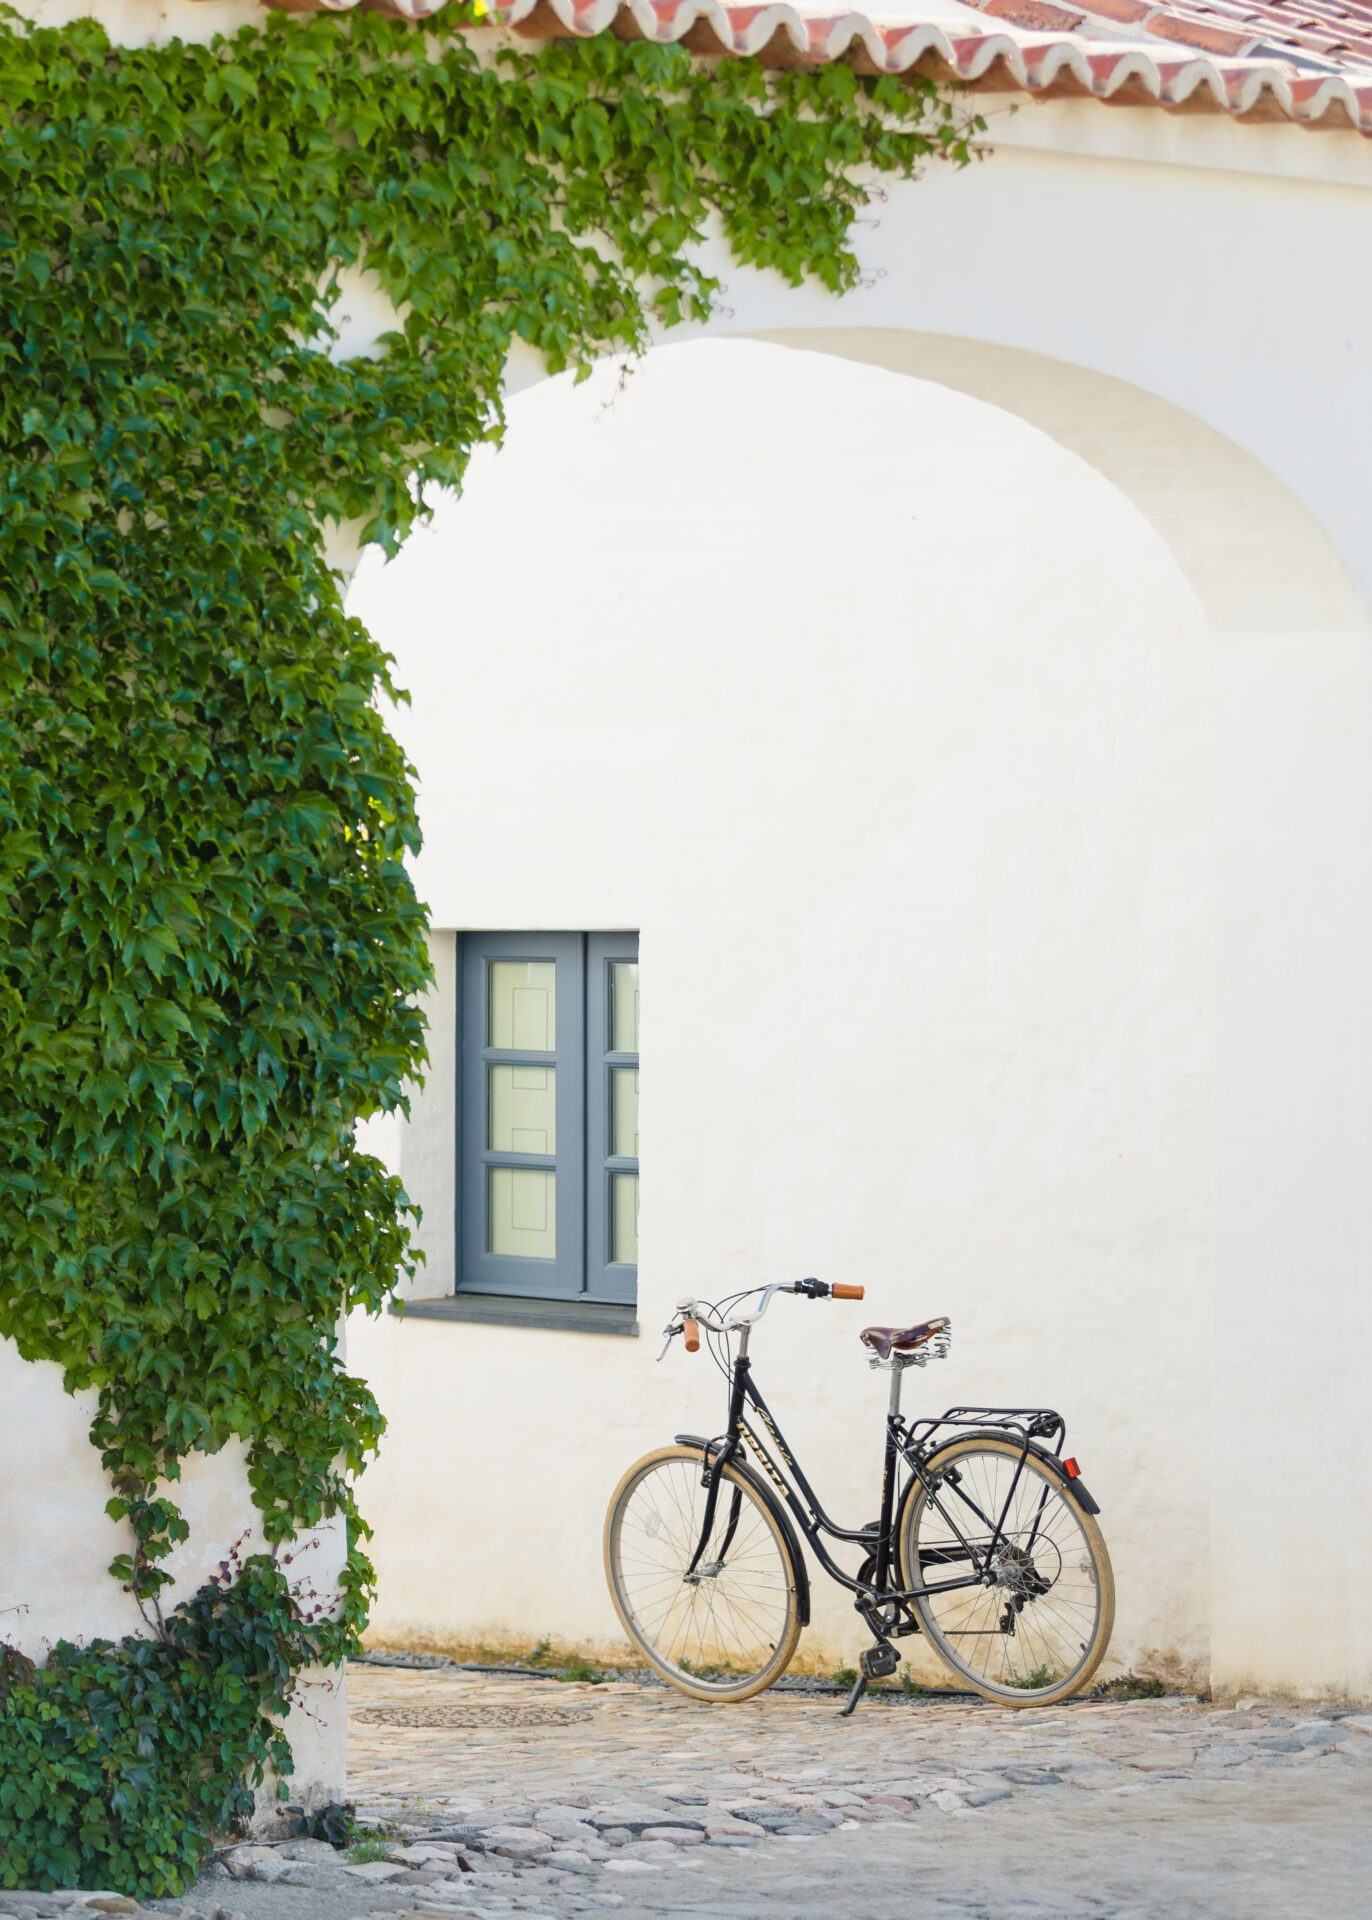 São Lourenço do Barrocal, a bicyle leans against a whitewashed building beneath a tree